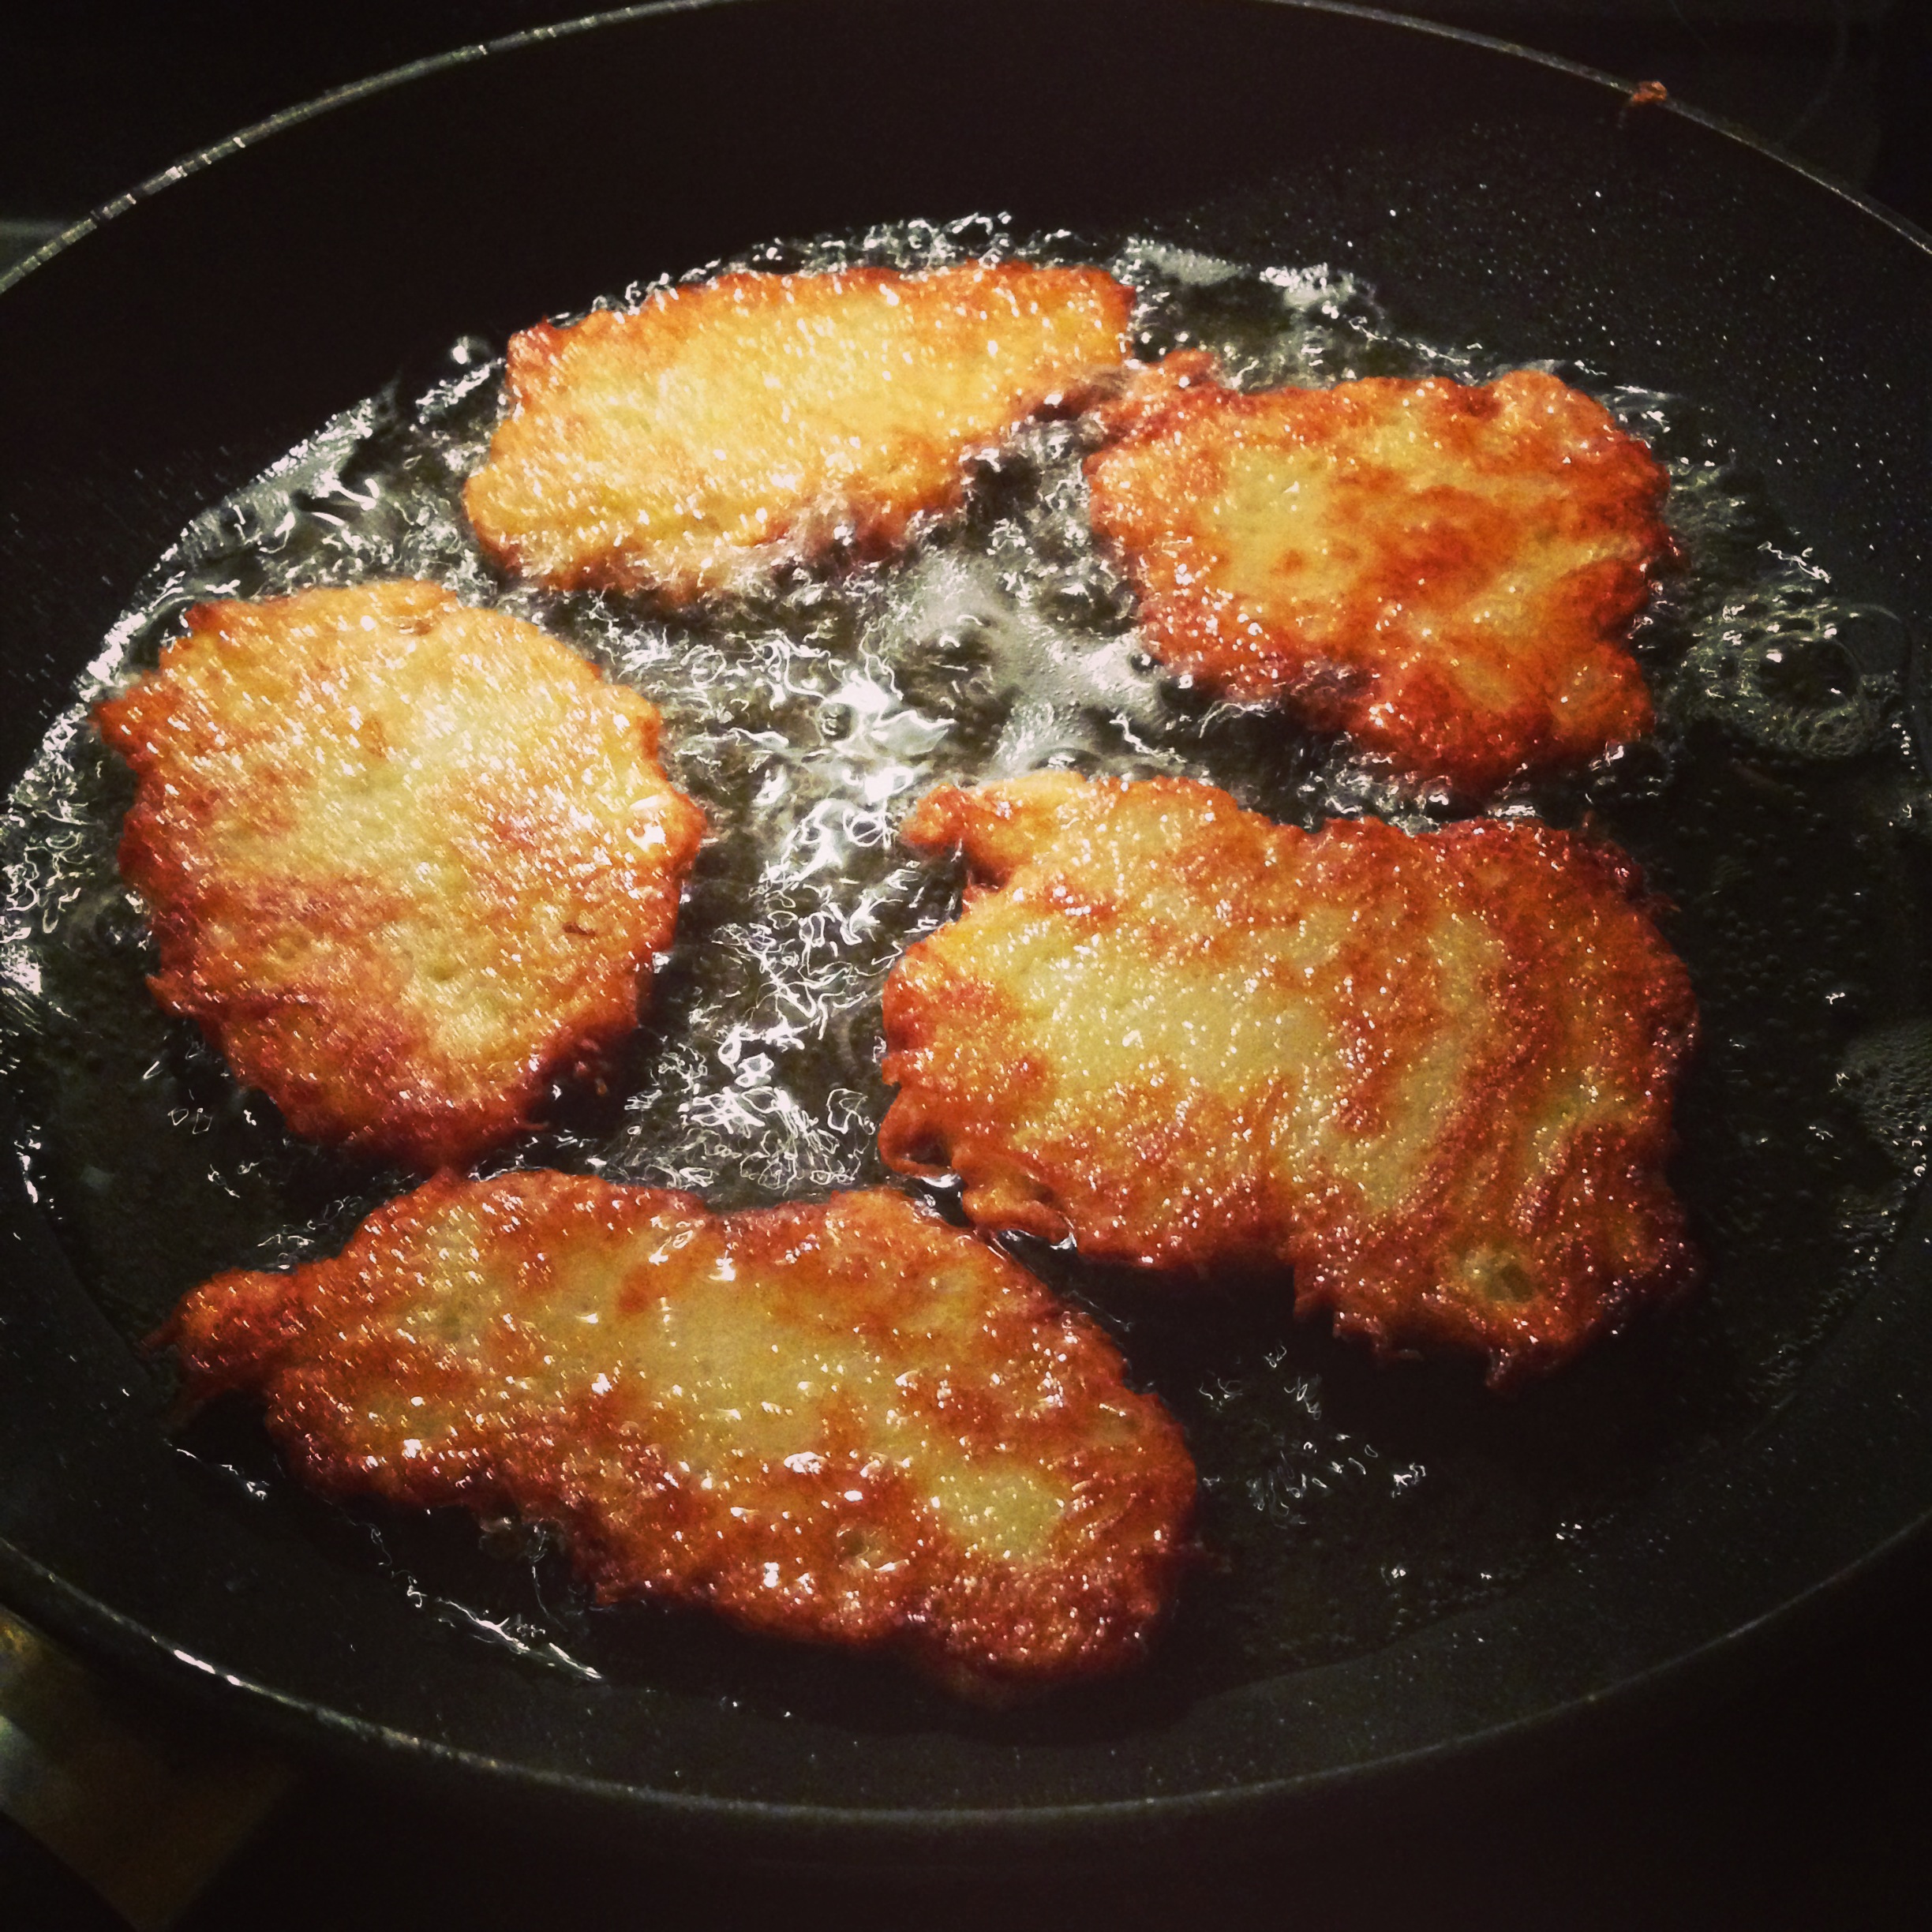 https://upload.wikimedia.org/wikipedia/commons/e/e9/Potato_pancakes_in_a_frying_pan.jpg